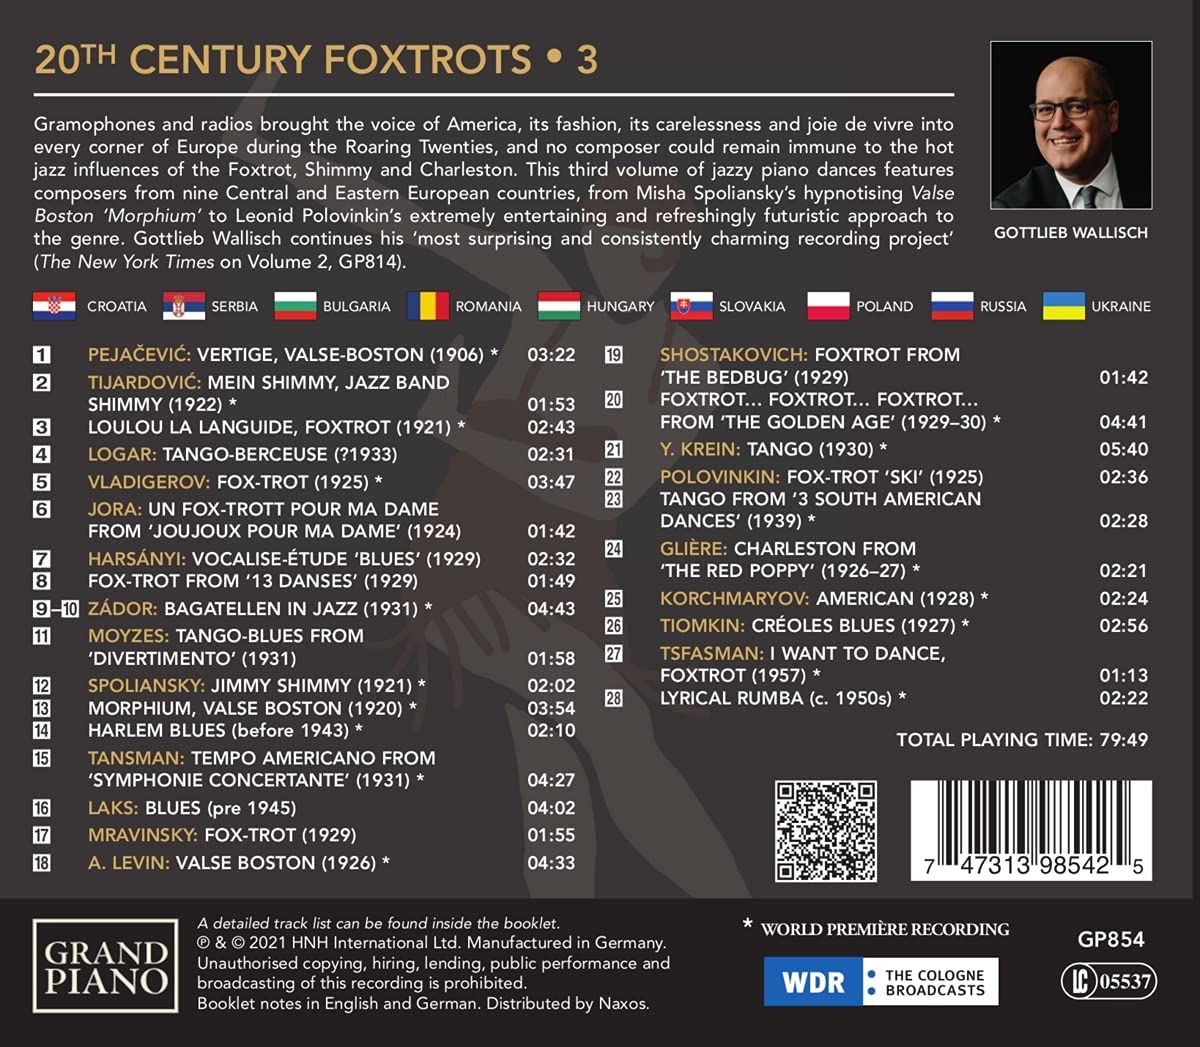 Gottlieb Wallisch 20세기 폭스트롯 3집 (20th Century Foxtrots Vol. 3 - Central and Eastern Europe) 